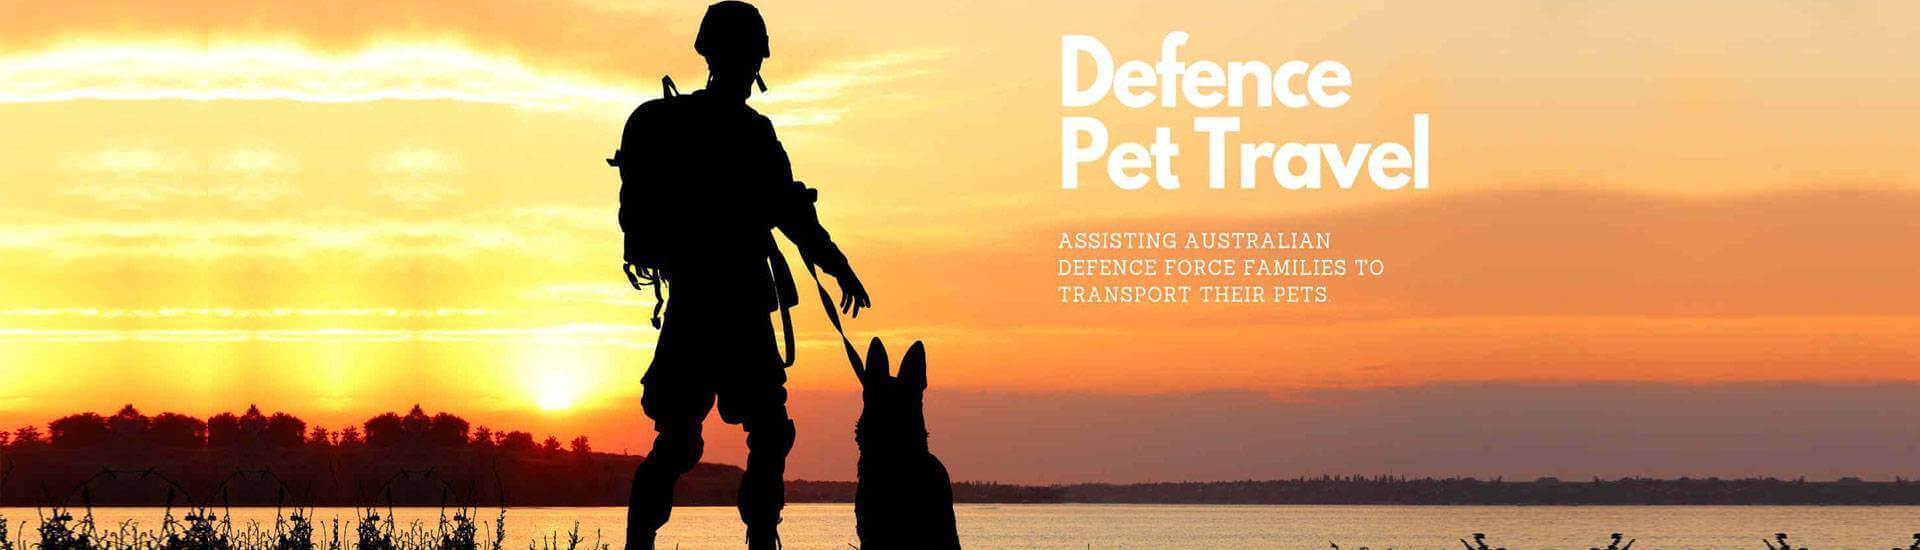 Defence pet travel